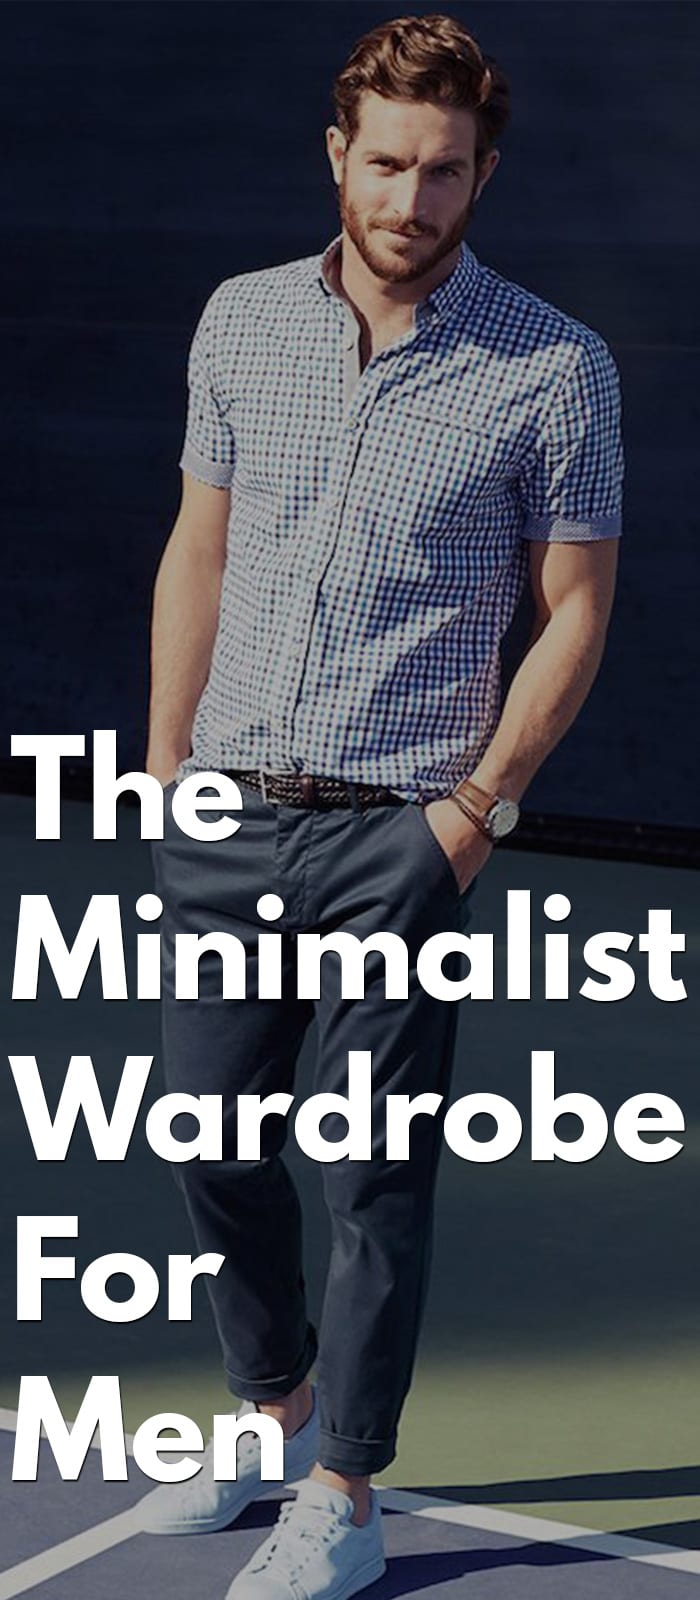 The Minimalist Wardrobe For Men